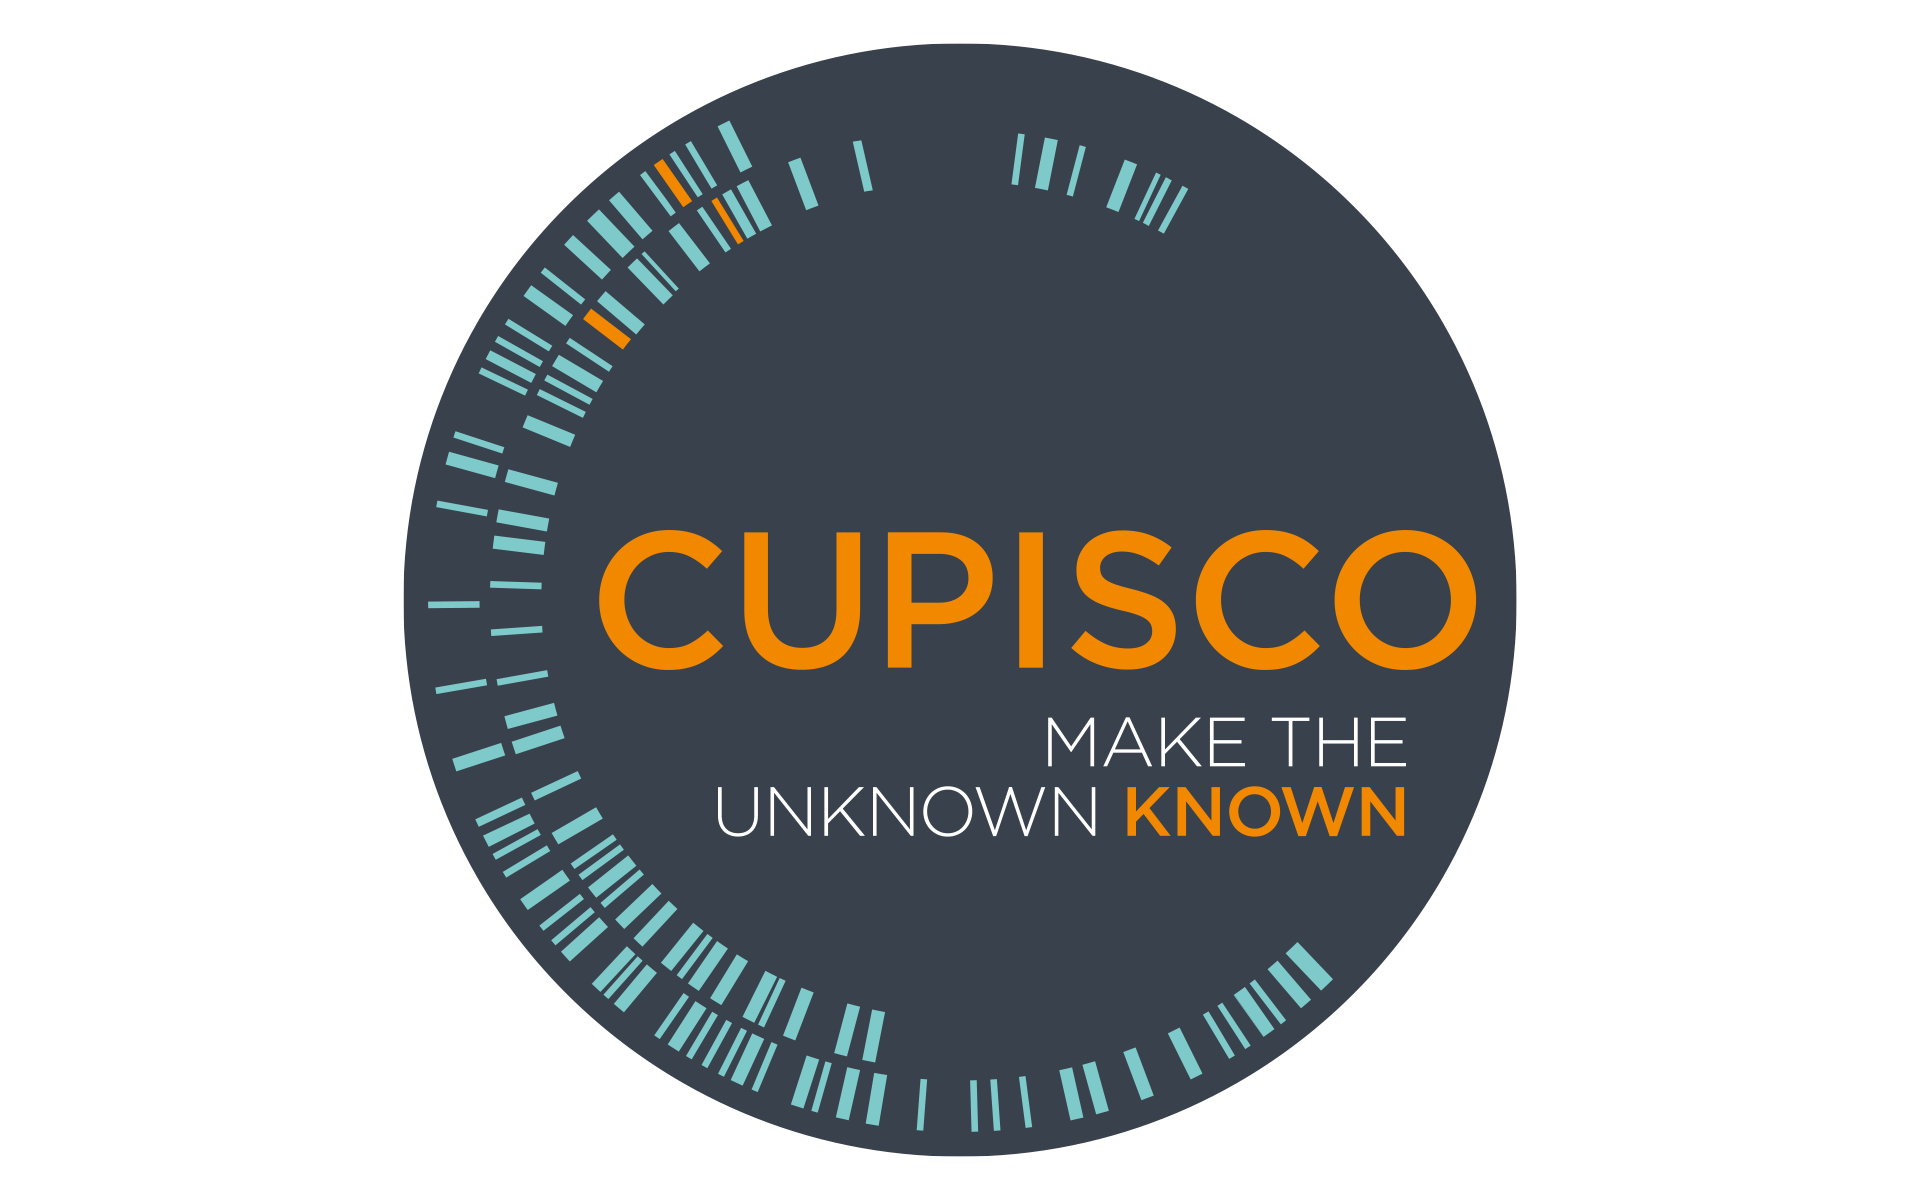 CUPISCO - Make the Unknown Known